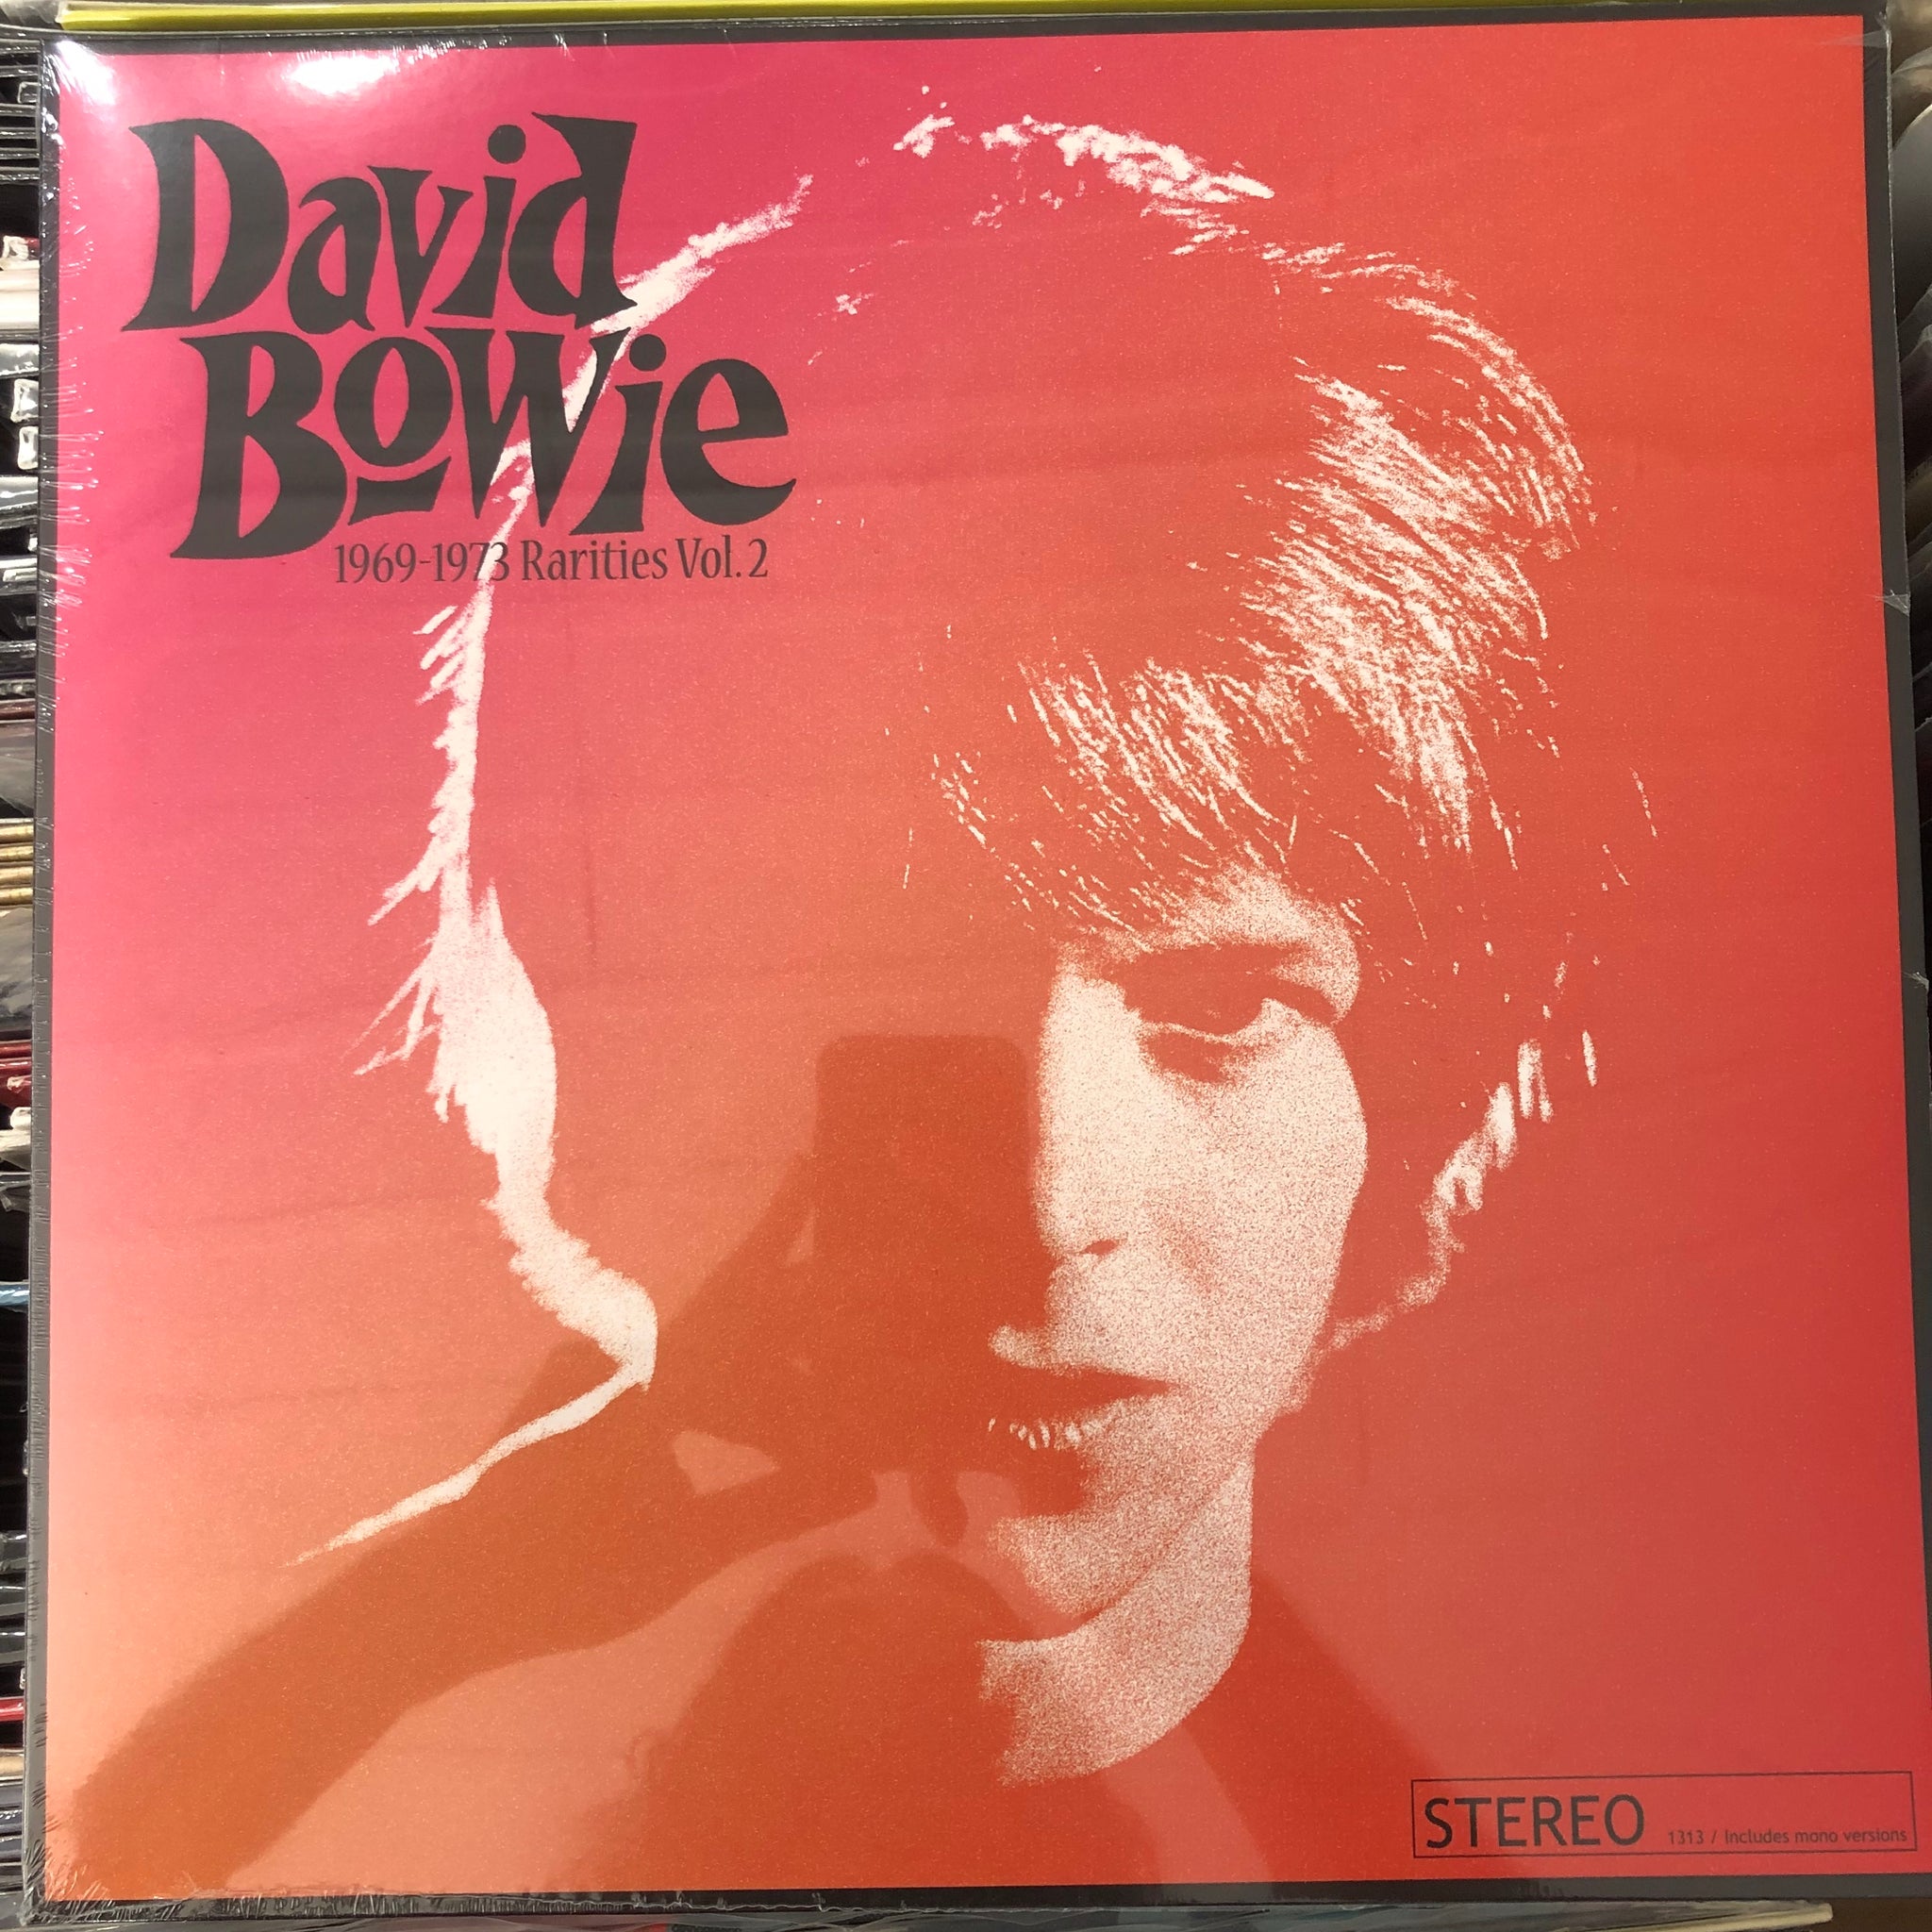 David Bowie - 1969-1973 Rarities Vol. 2